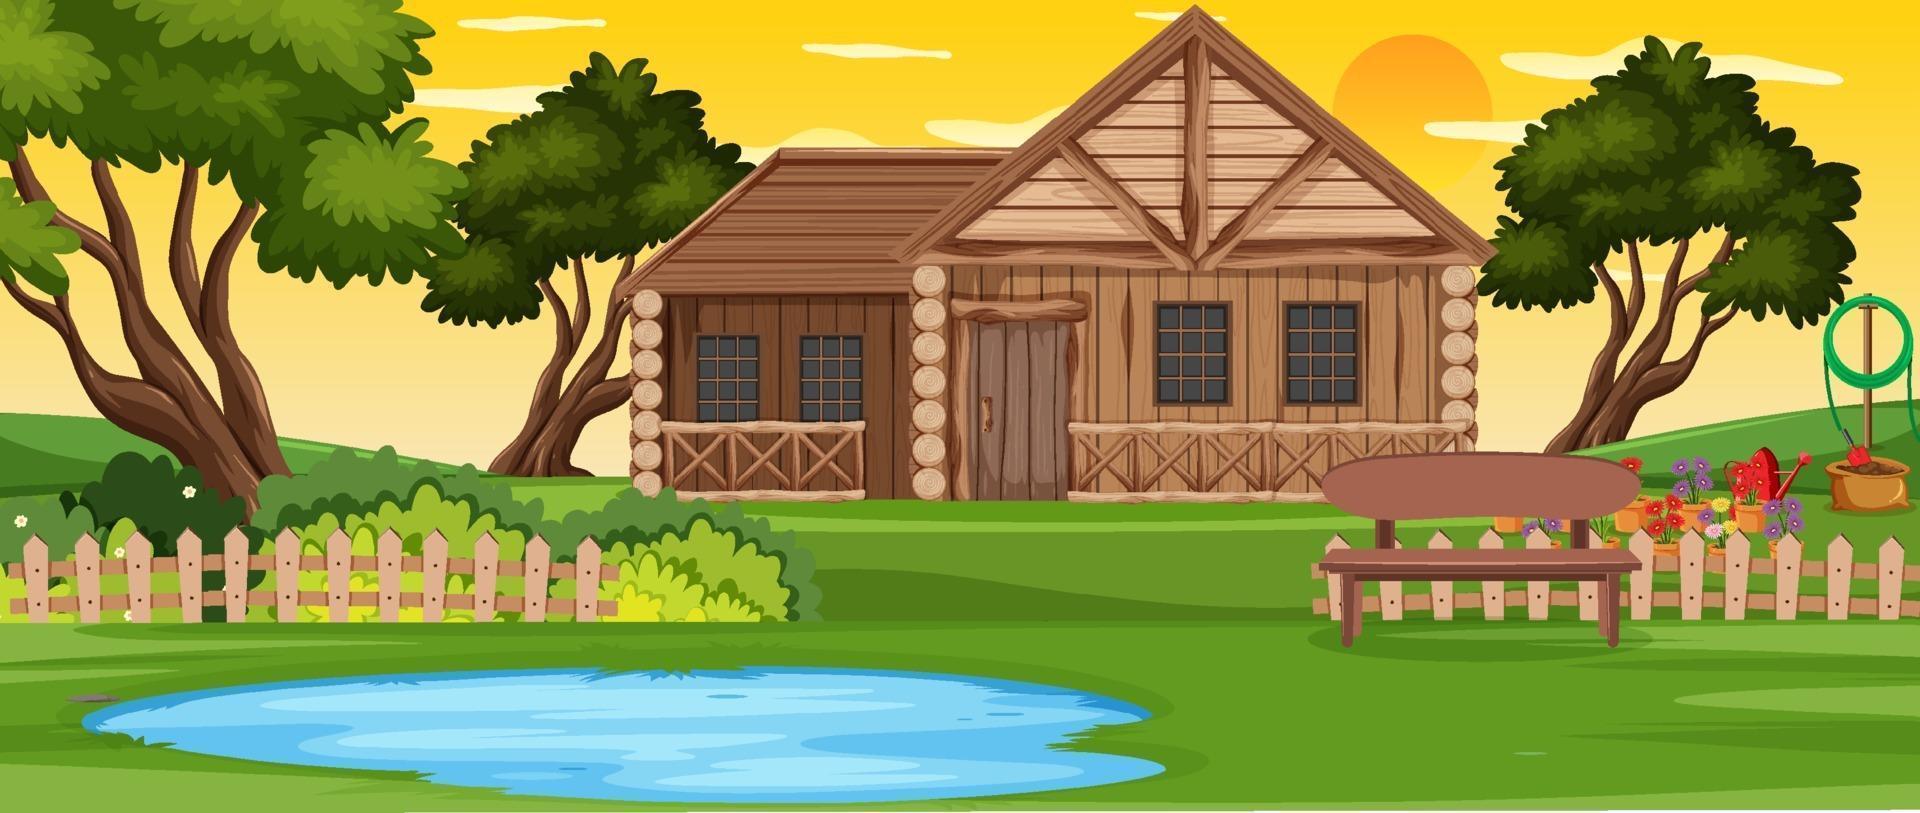 Rural wooden house outdoor landscape vector